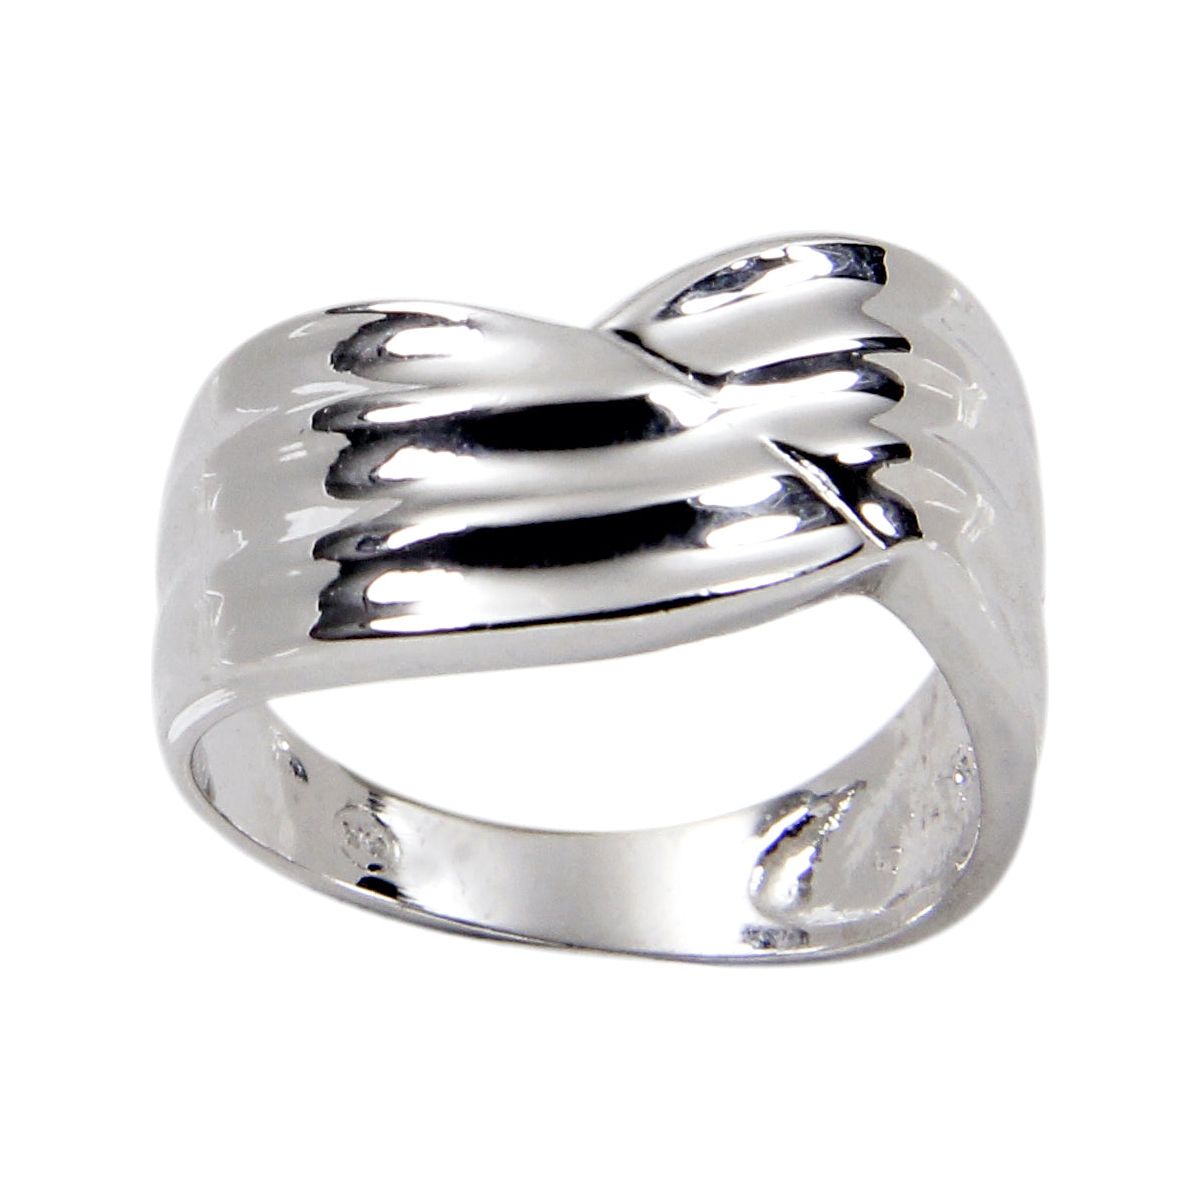 Asymmetrical Sterling Silver Ridged Chevron Band Ring